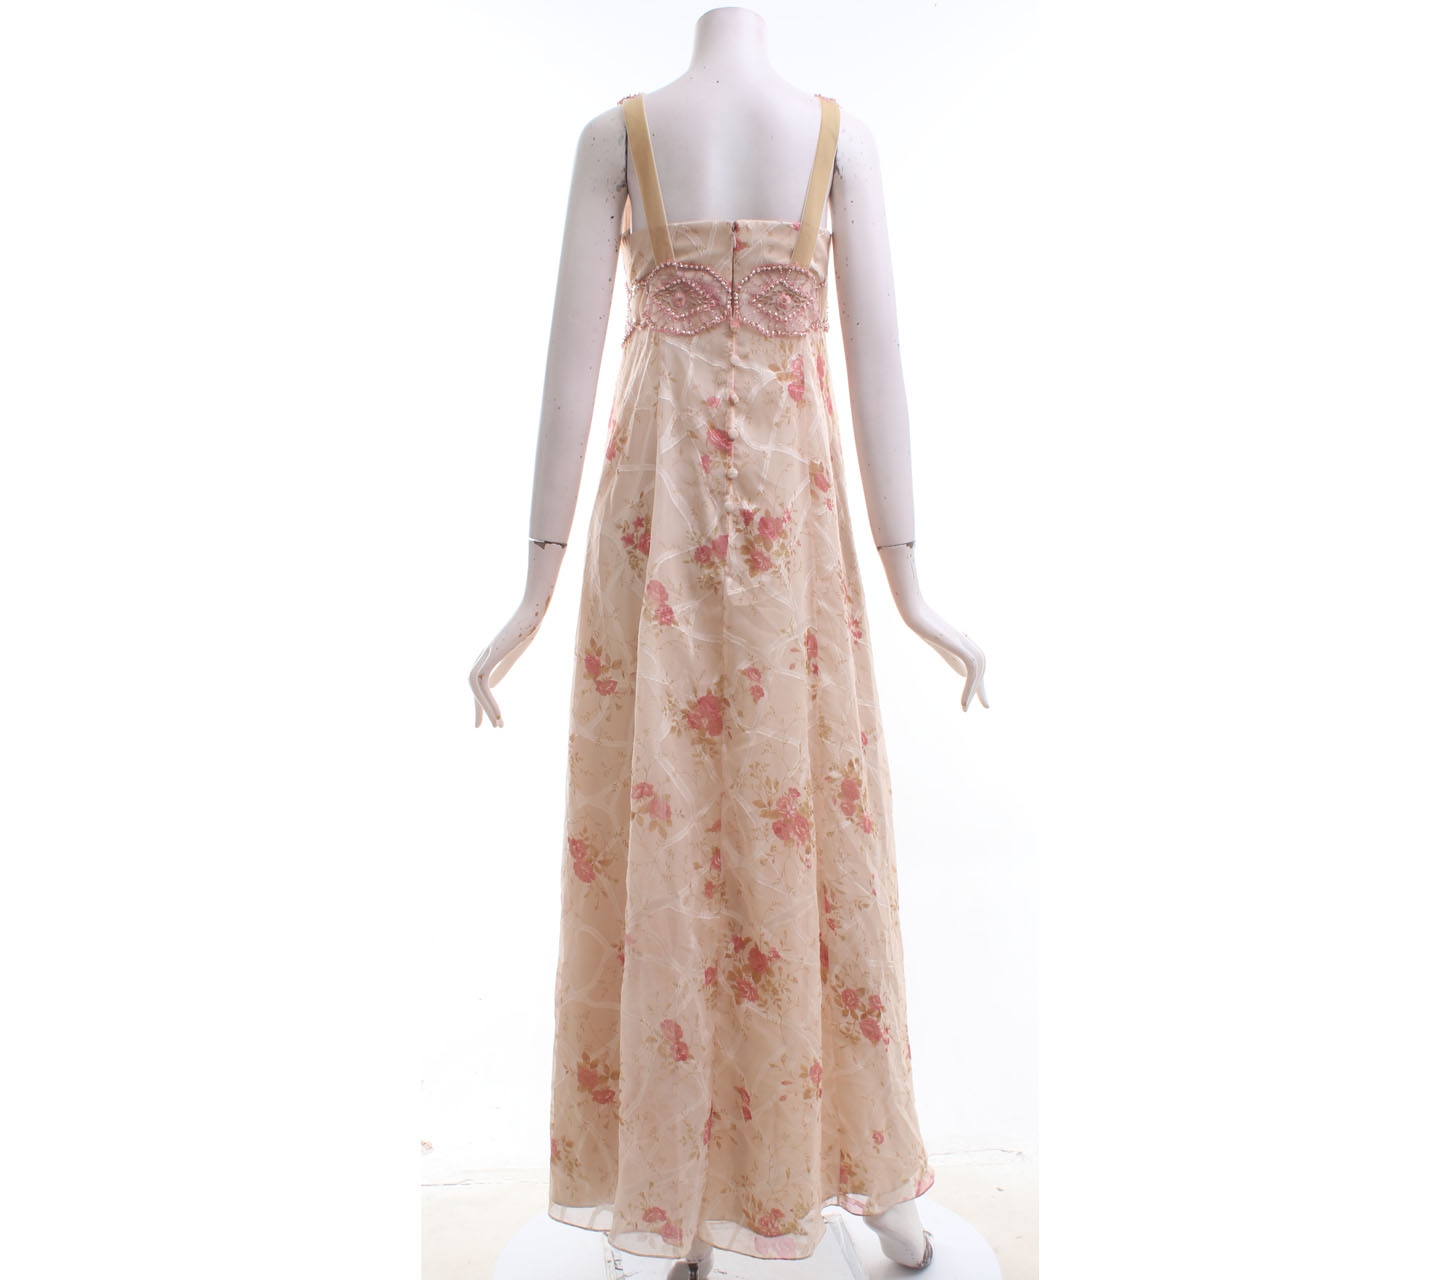 Votum by Sebastian & Cristina Patterned Floral Sequins Peach Long Dress